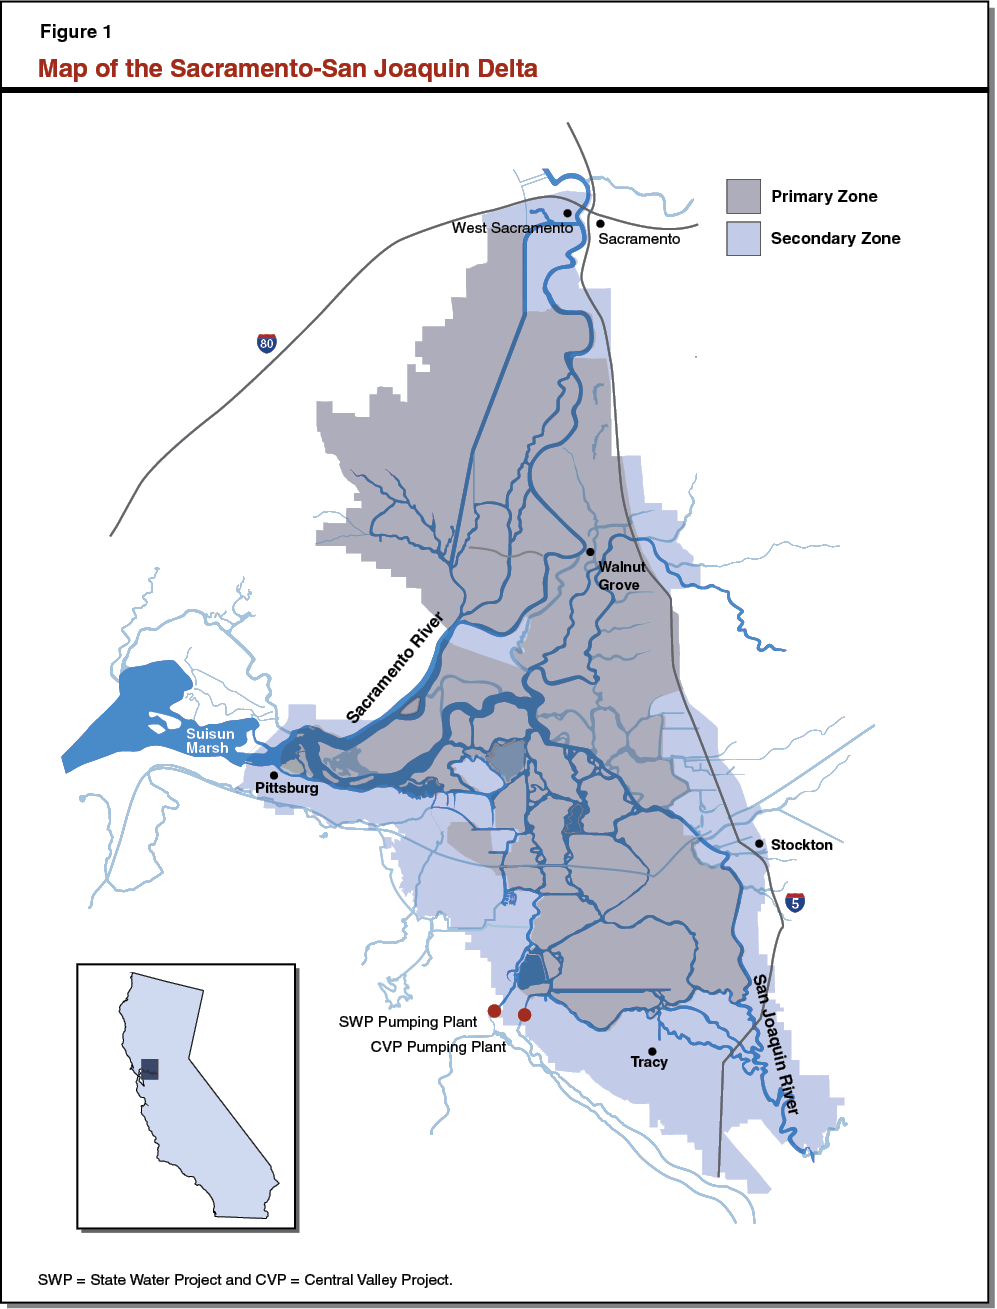 Figure 1: Map of the Sacramento-San Joaquin Delta